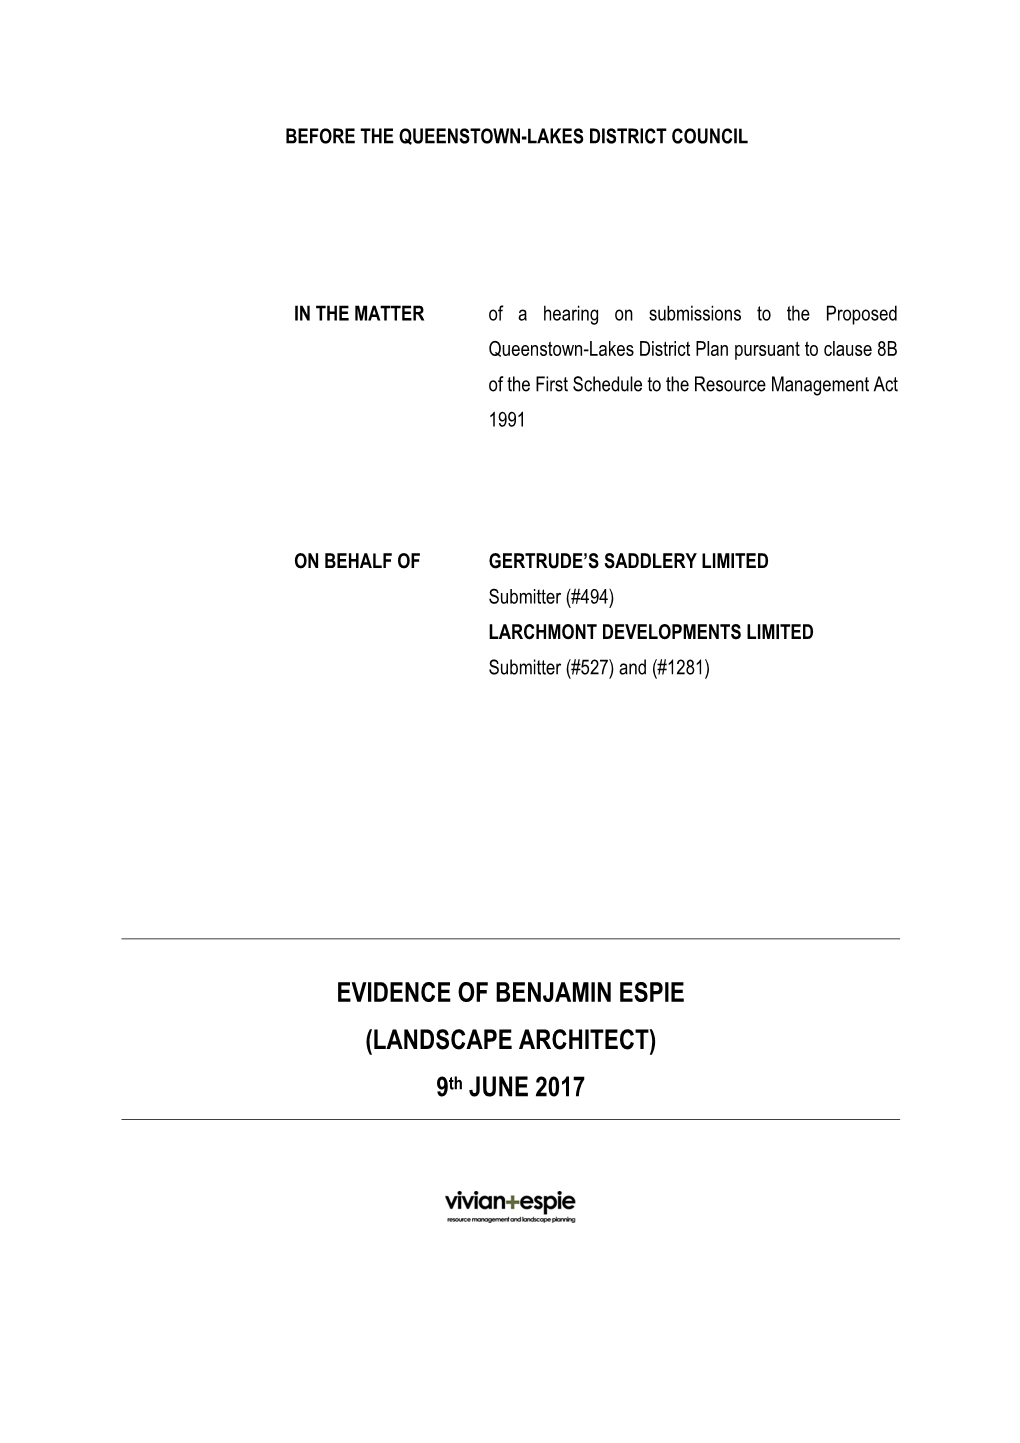 EVIDENCE of BENJAMIN ESPIE (LANDSCAPE ARCHITECT) 9Th JUNE 2017